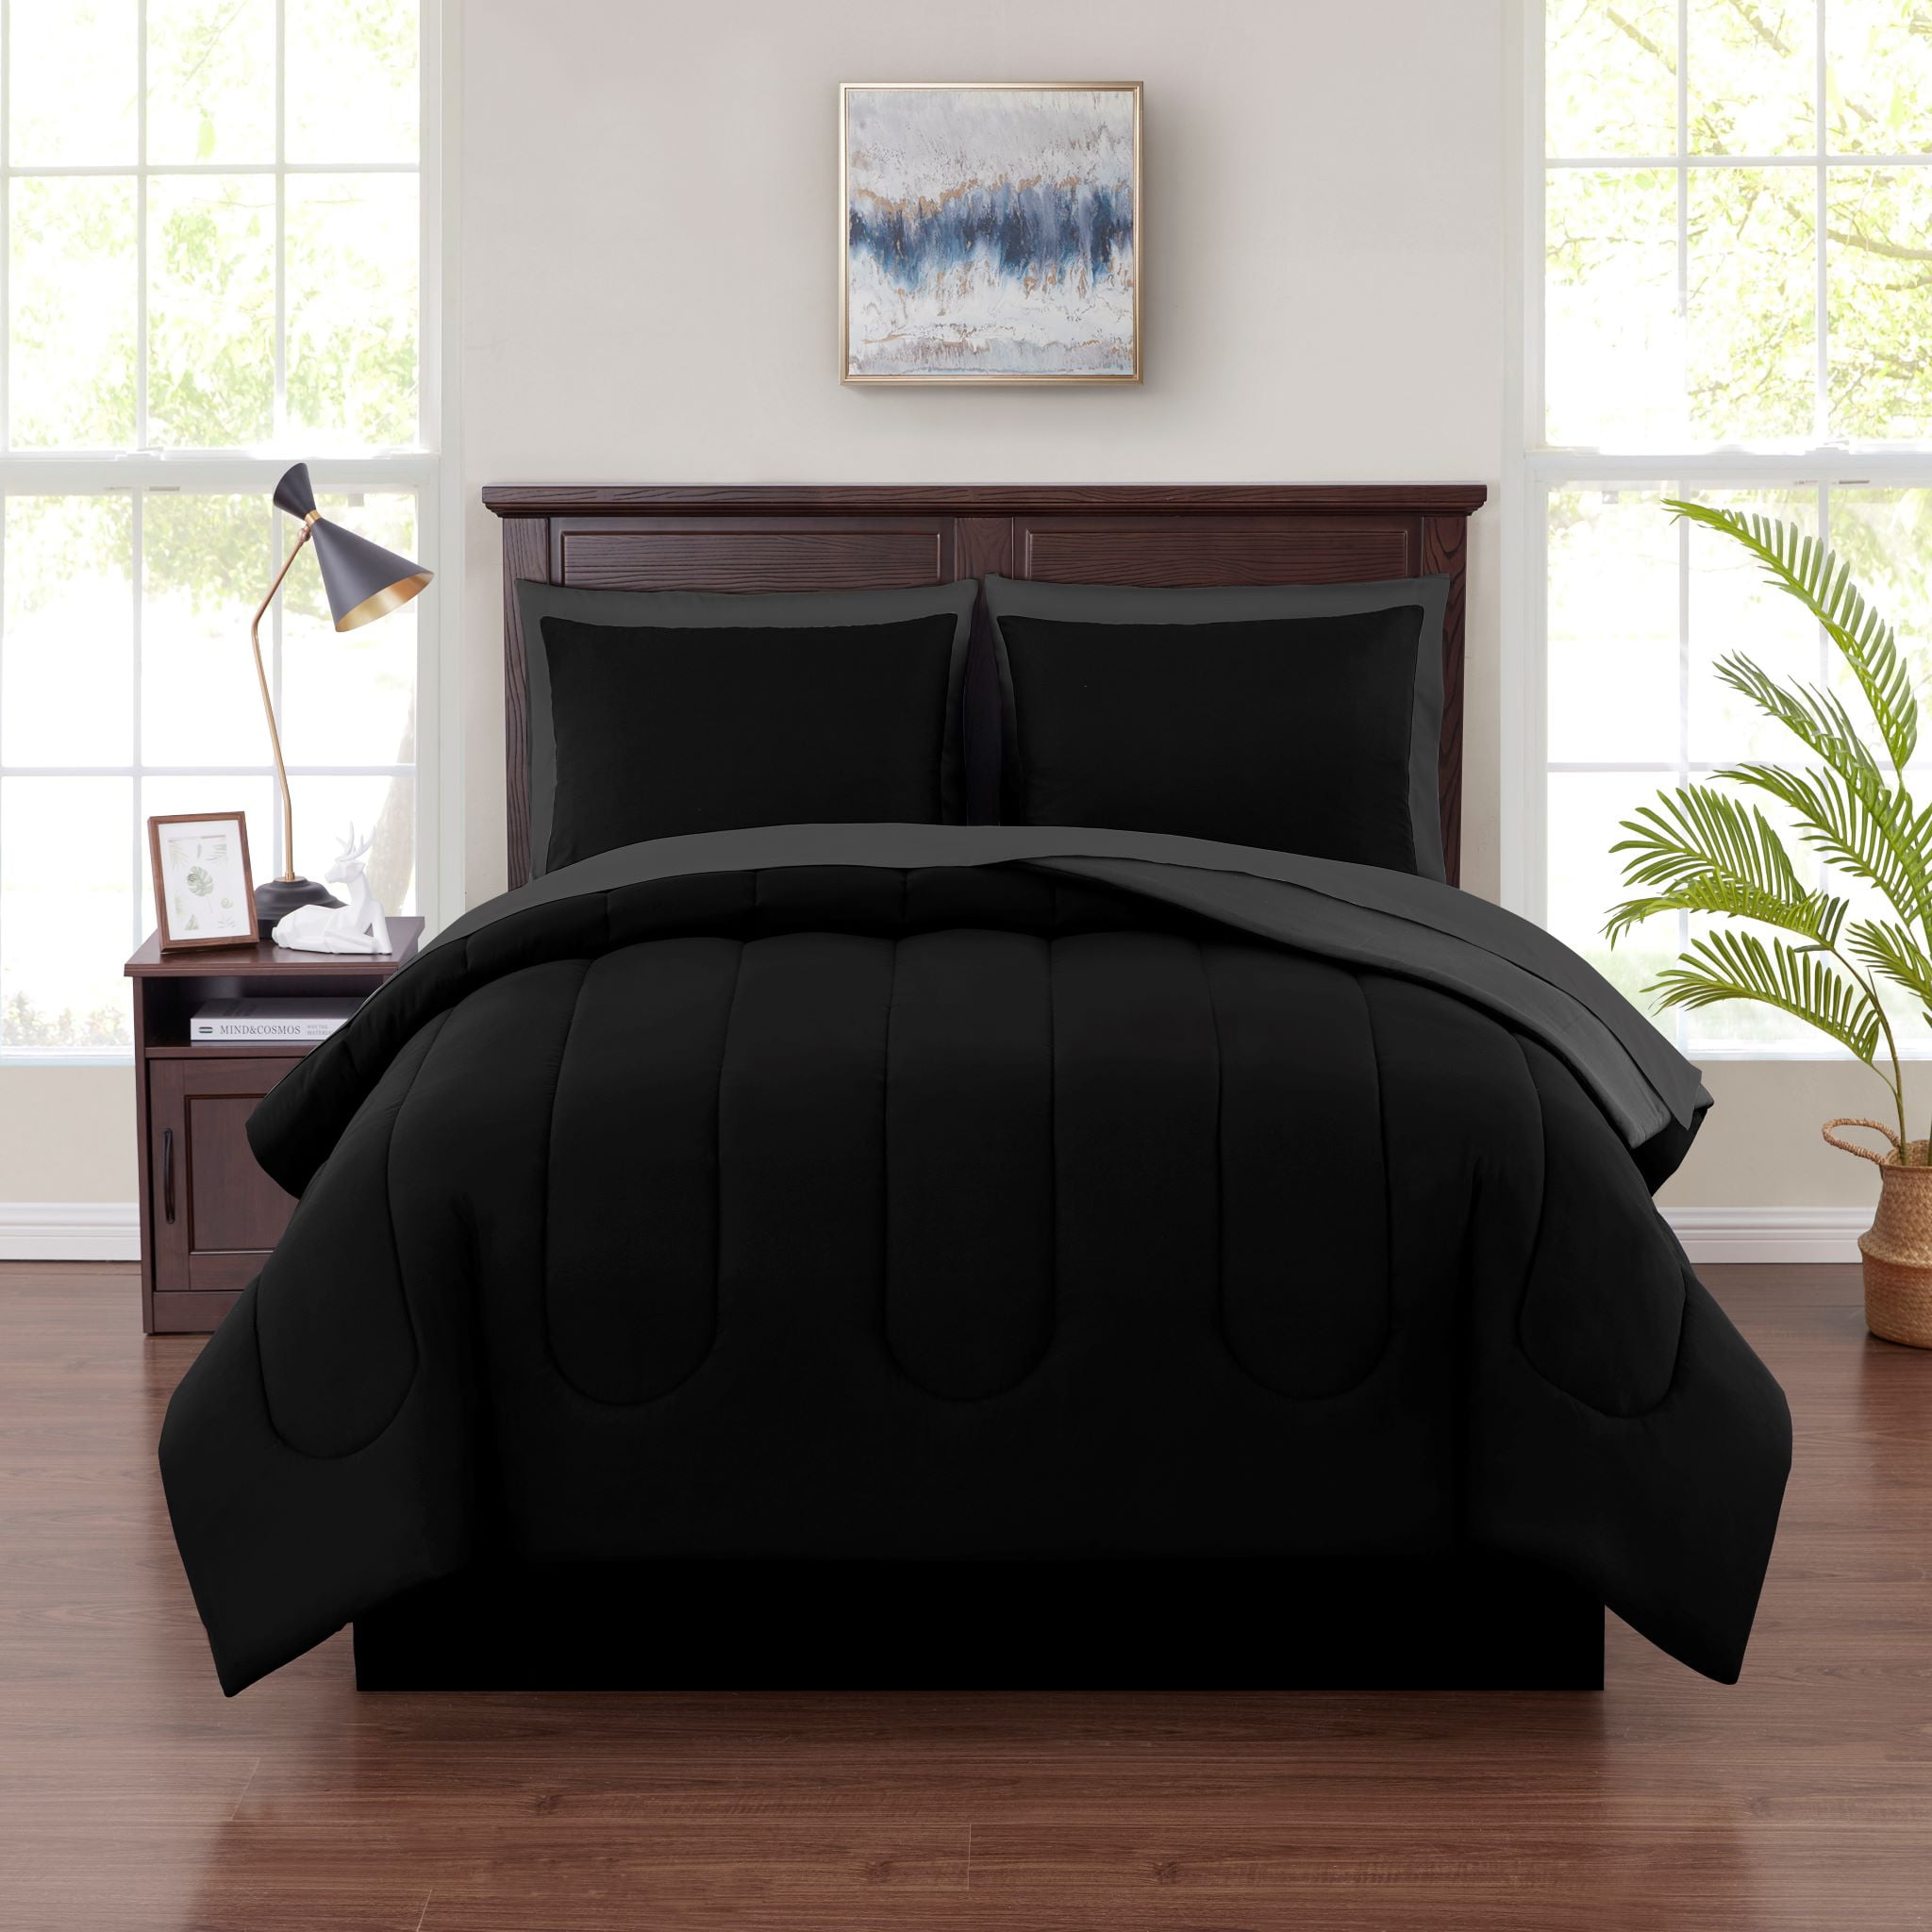 Beige Black White Pintuck Striped 7pc Comforter Set Twin Full